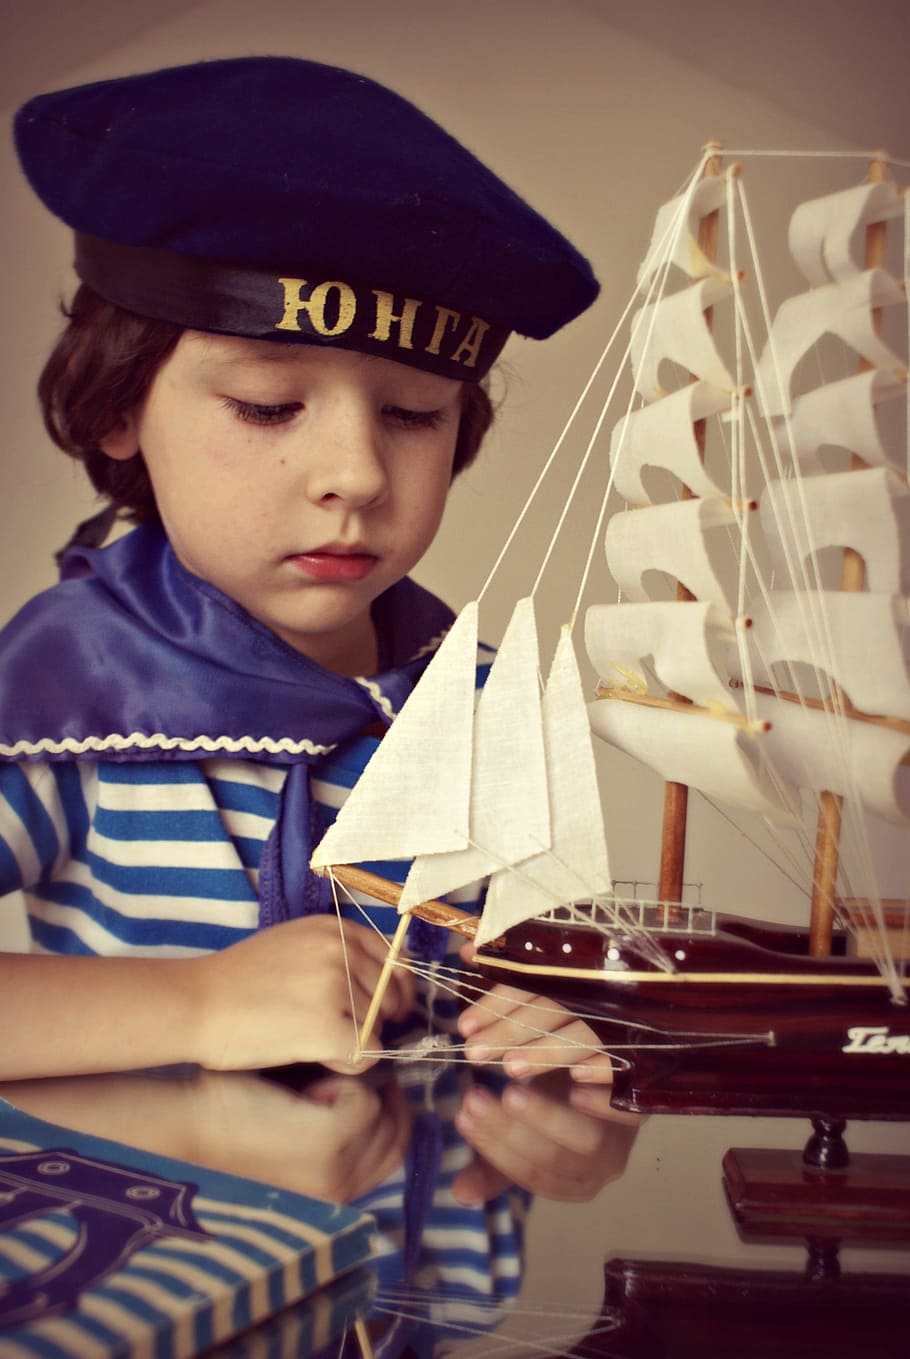 HD wallpaper: boy, ship, sailor, kids, sea, view, childhood, nicely ...